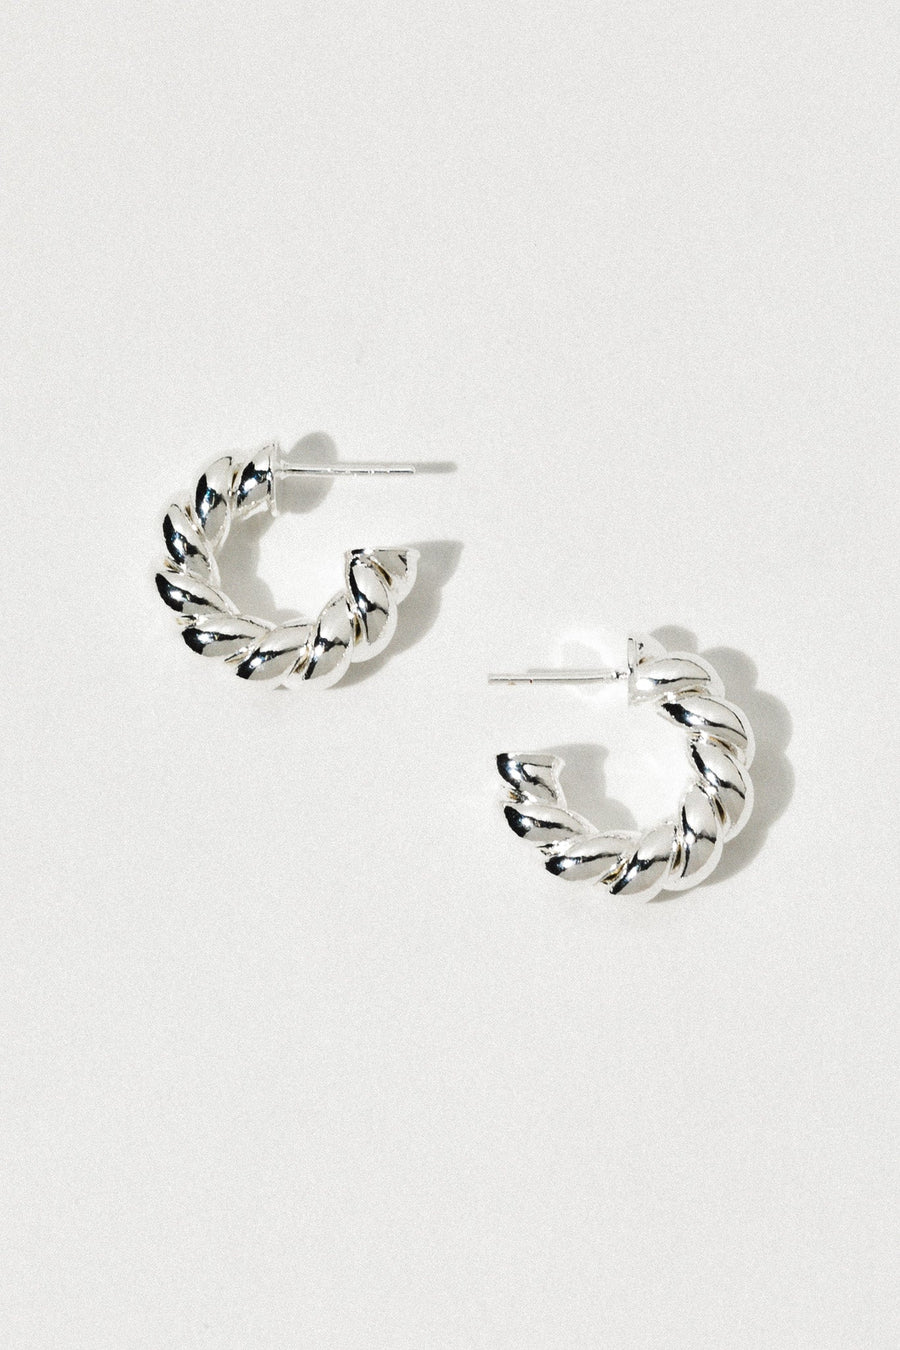 Dona Italia Jewelry Twisted Sister Earrings.:.Silver